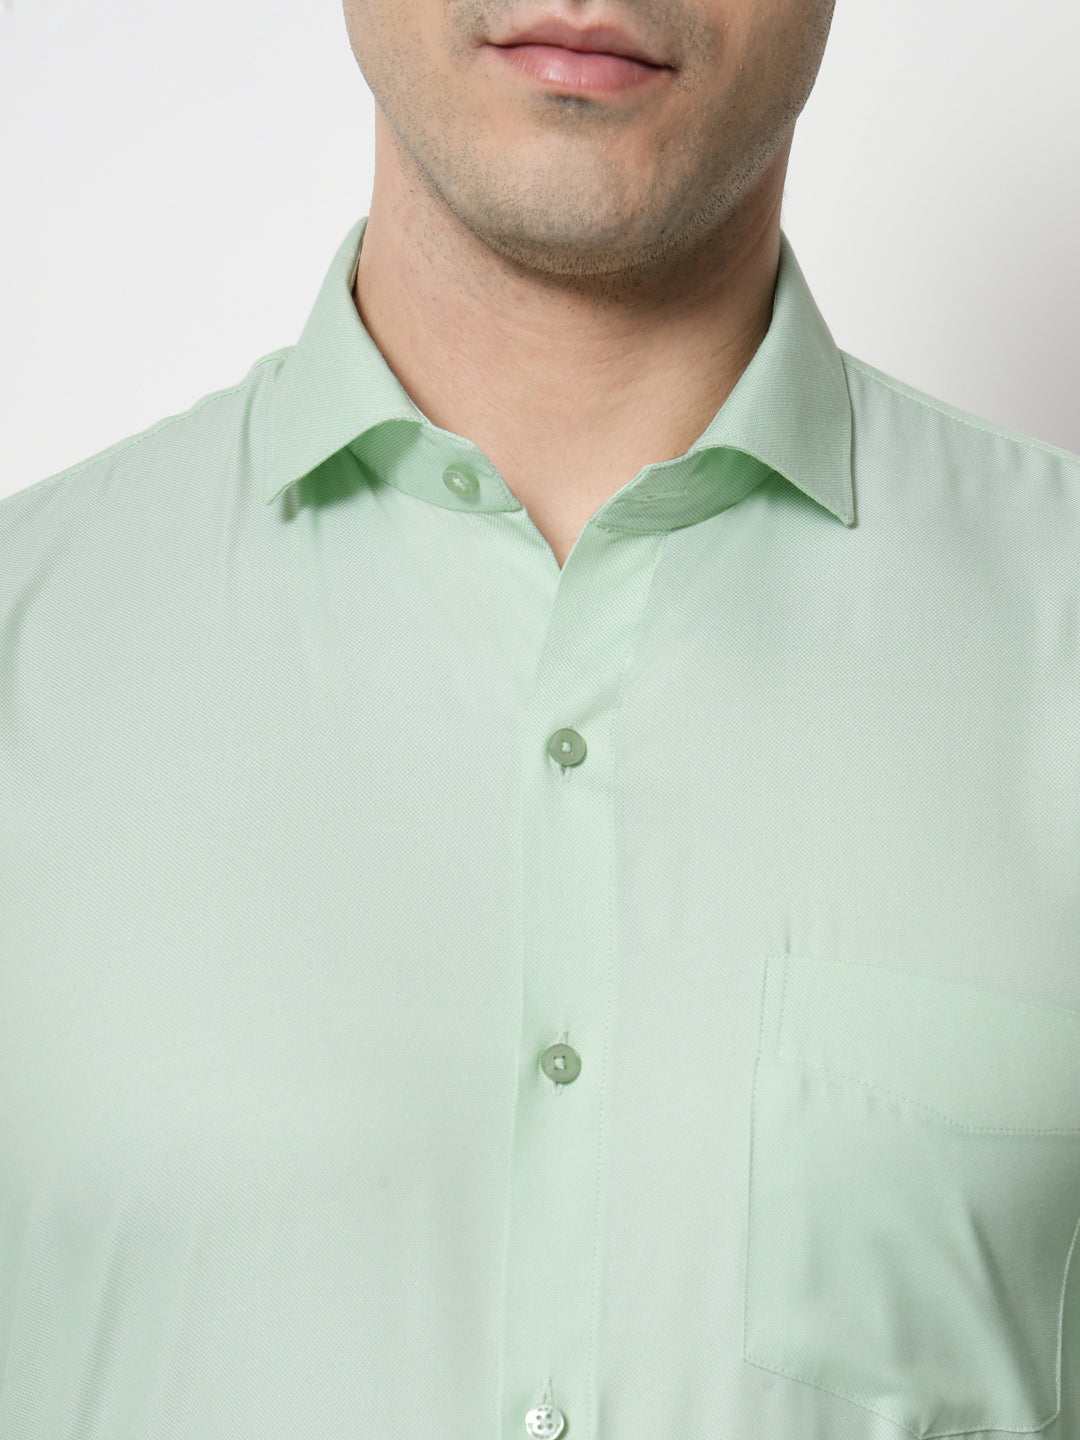 Black and White Shirts Pista Green Dobby Shirt